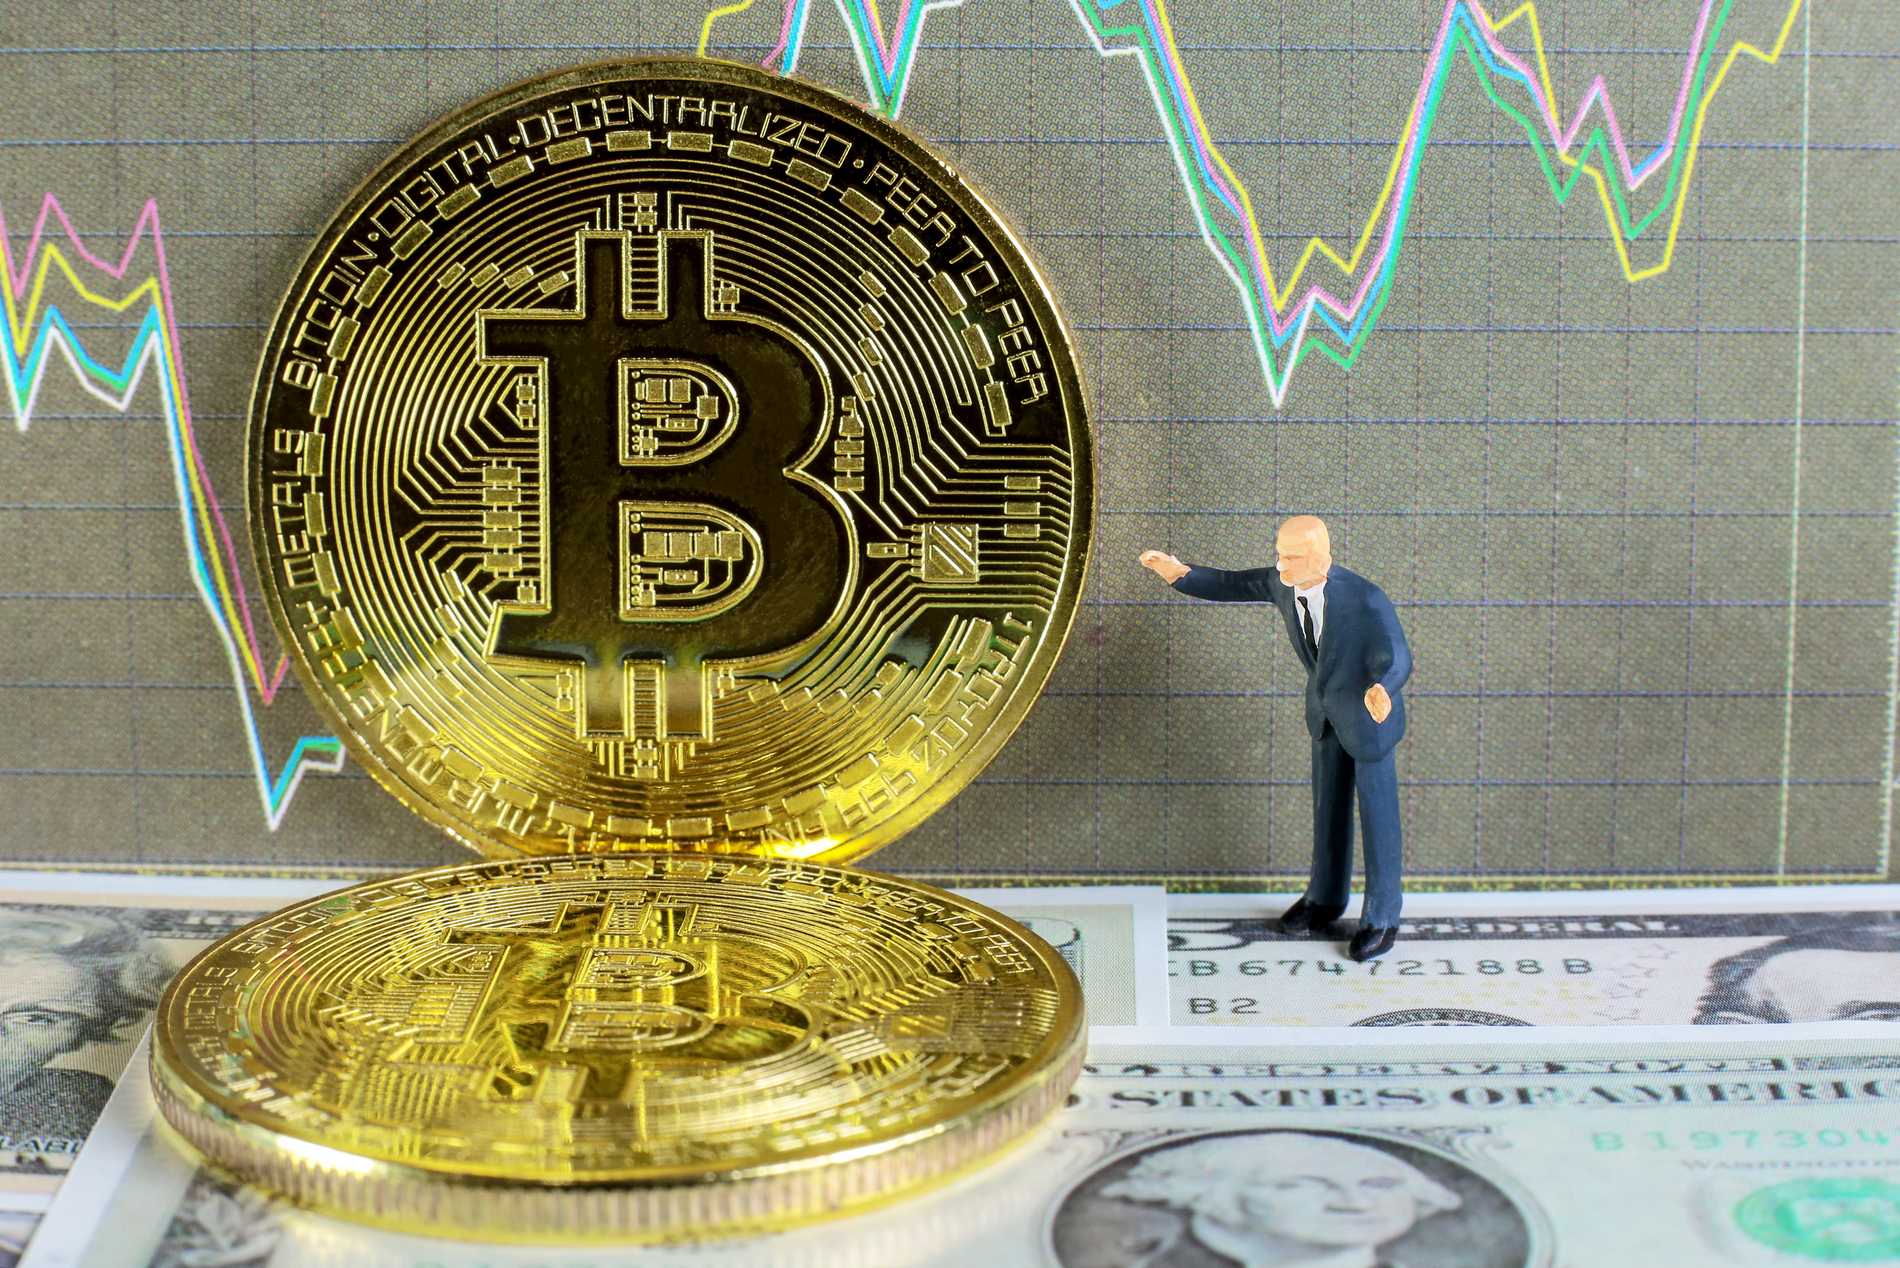 Bitcoin Drops Below Long-Term Price Support At $10K